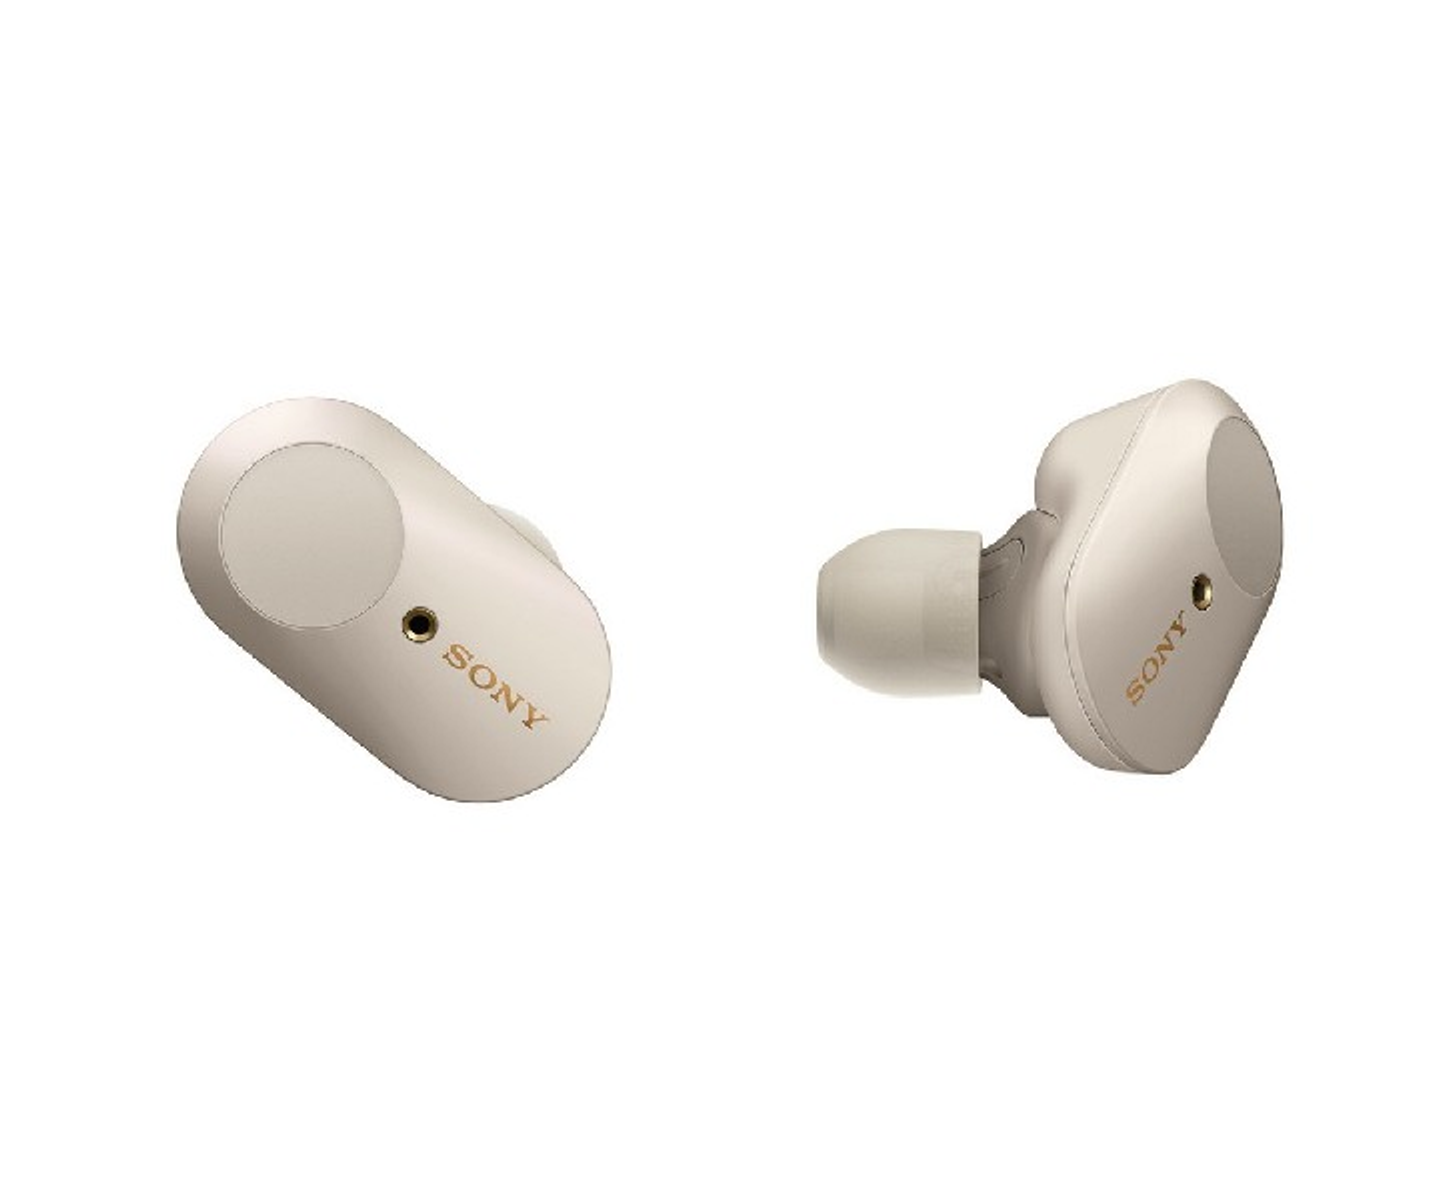 SONY WF 1000 Bluetooth XM3S In-ear Kopfhörer Silber SILBER